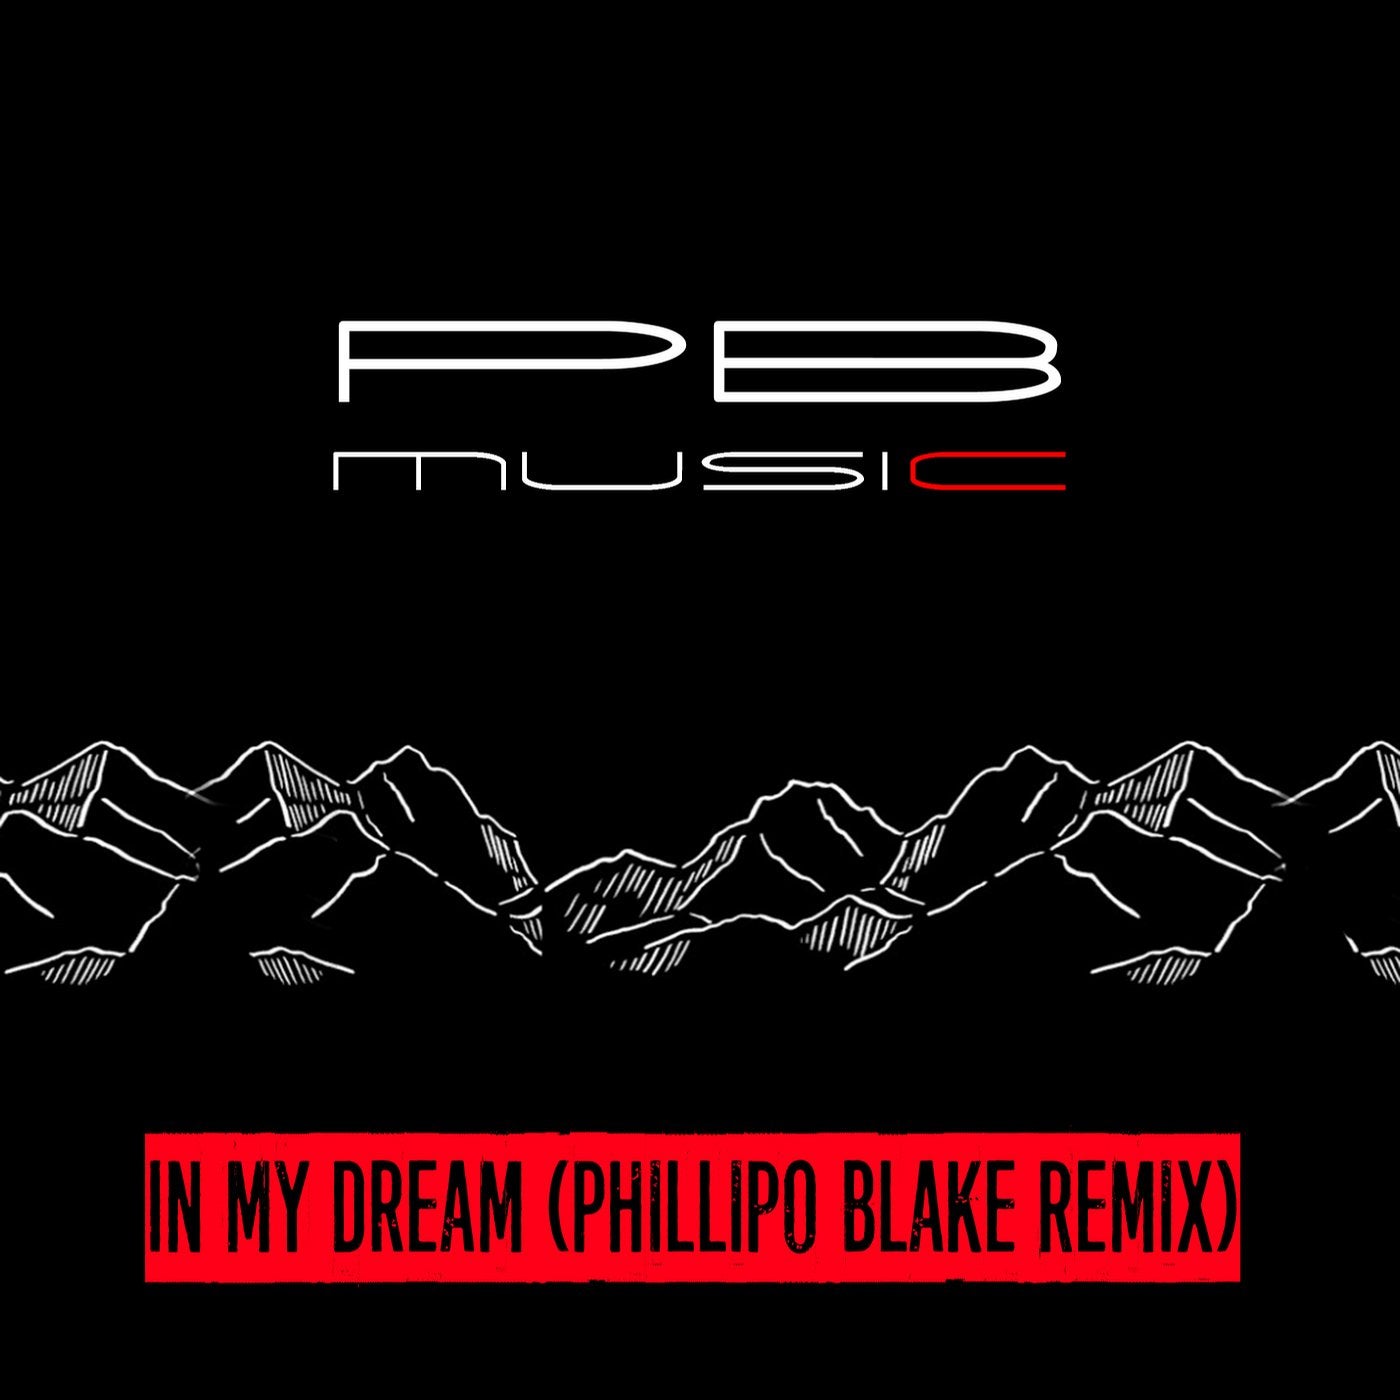 In My Dream (Phillipo Blake Remix)